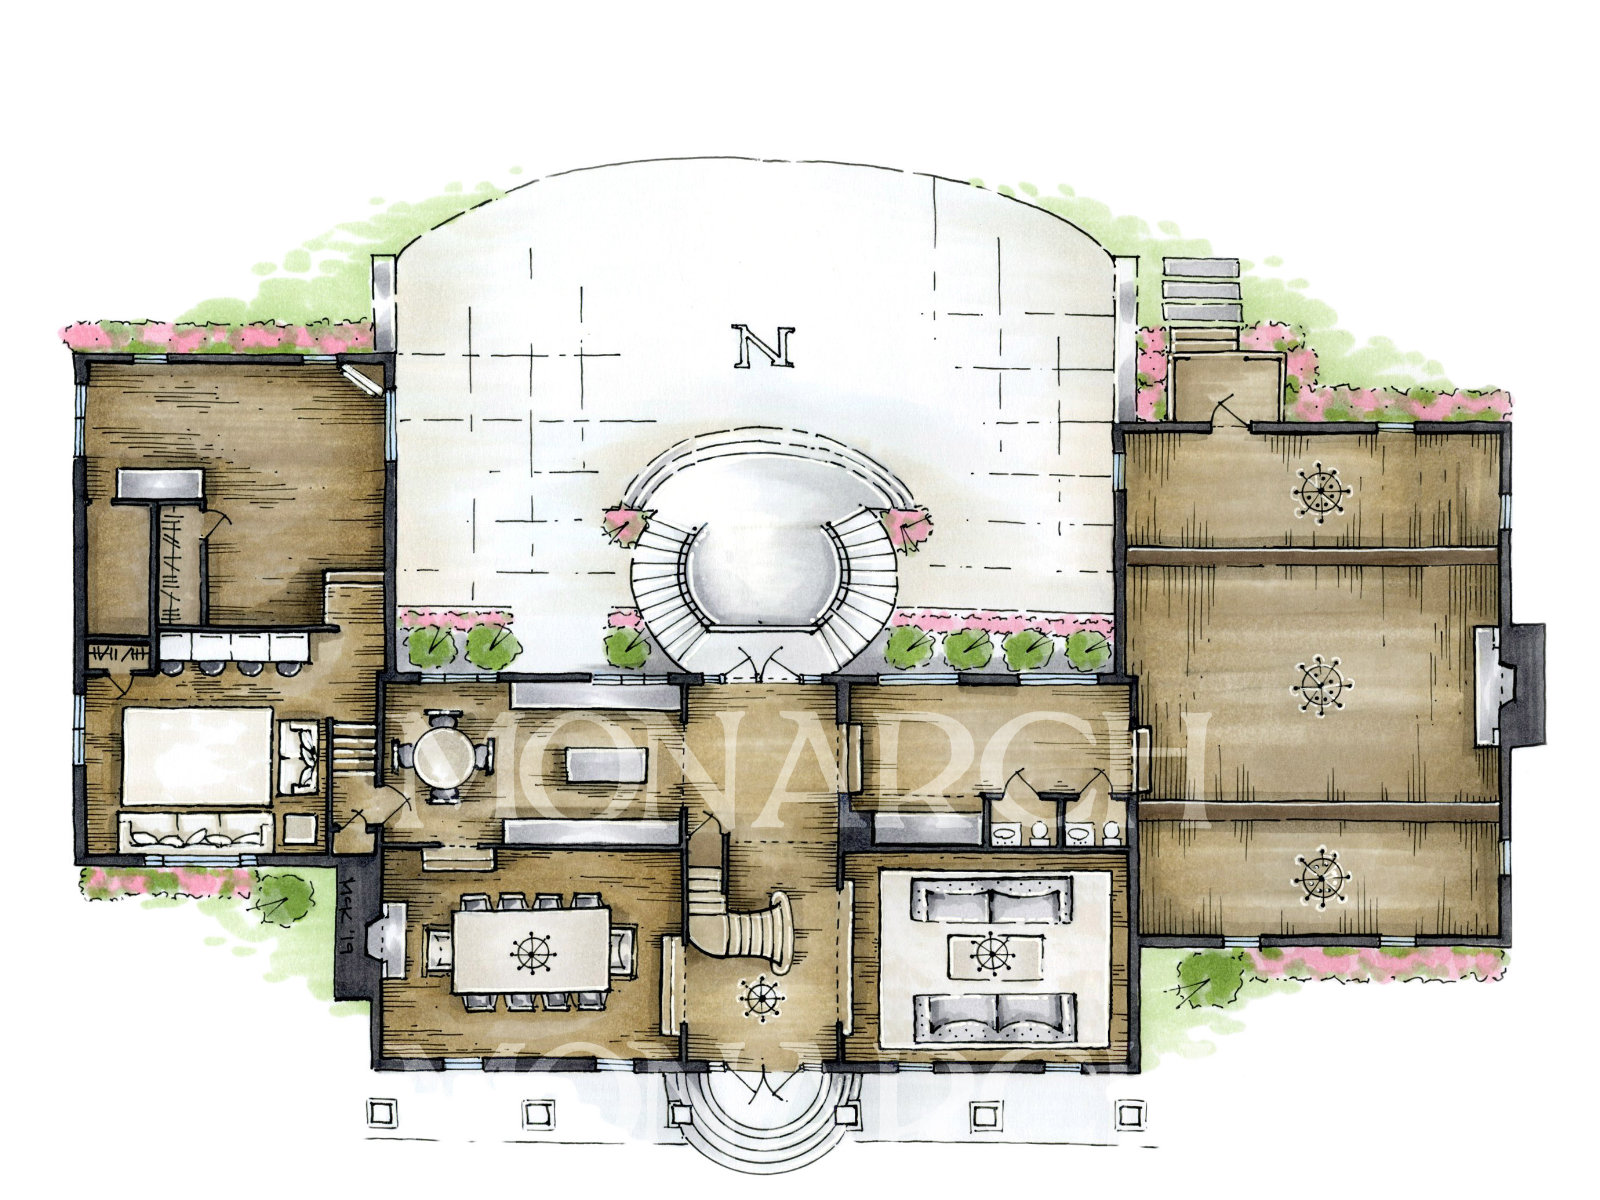 custom hand rendering of a wedding venue's floor plan